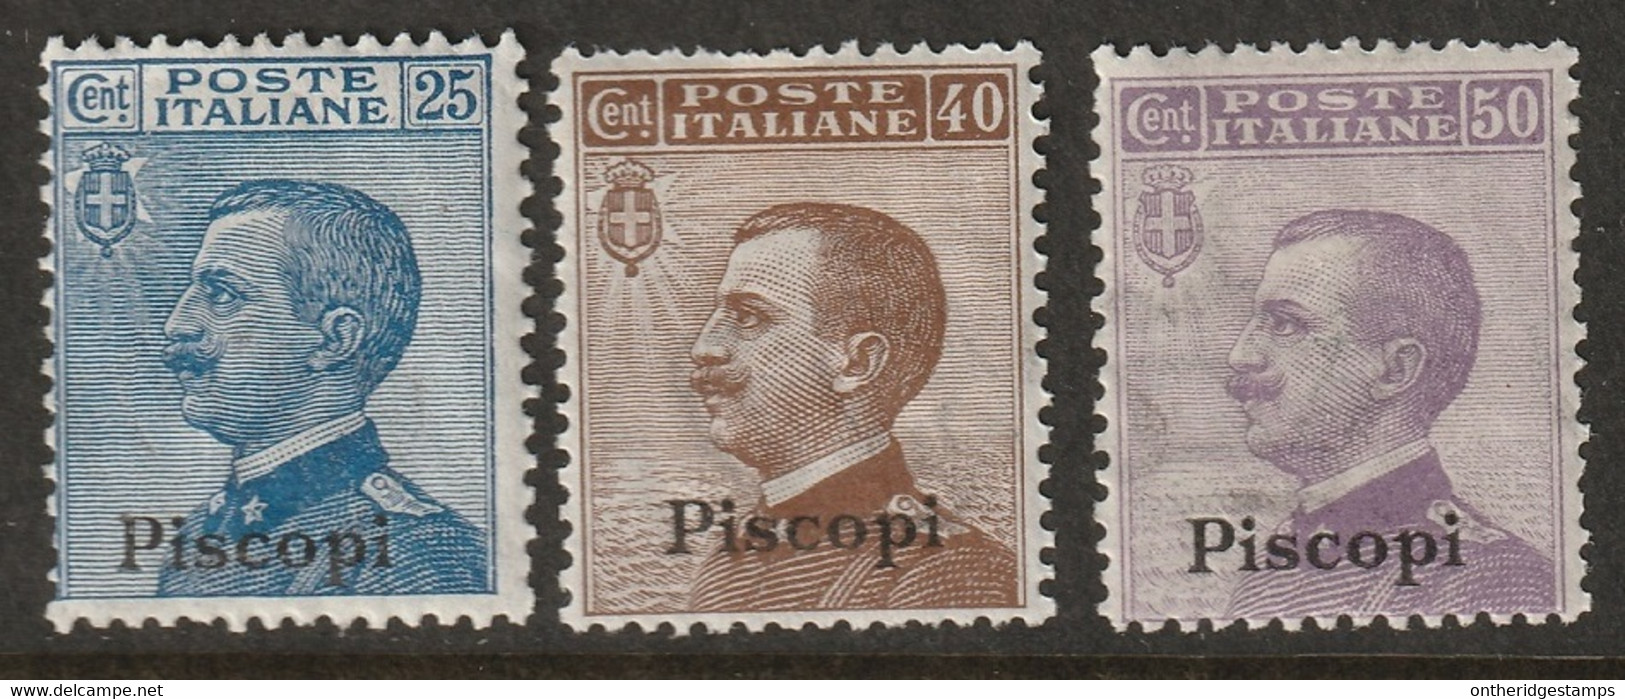 Italy Aegean Piscopi 1912 Sc 6-8 Egeo Piscopi Sa 5-7 MH* Some Crazed Gum - Aegean (Piscopi)